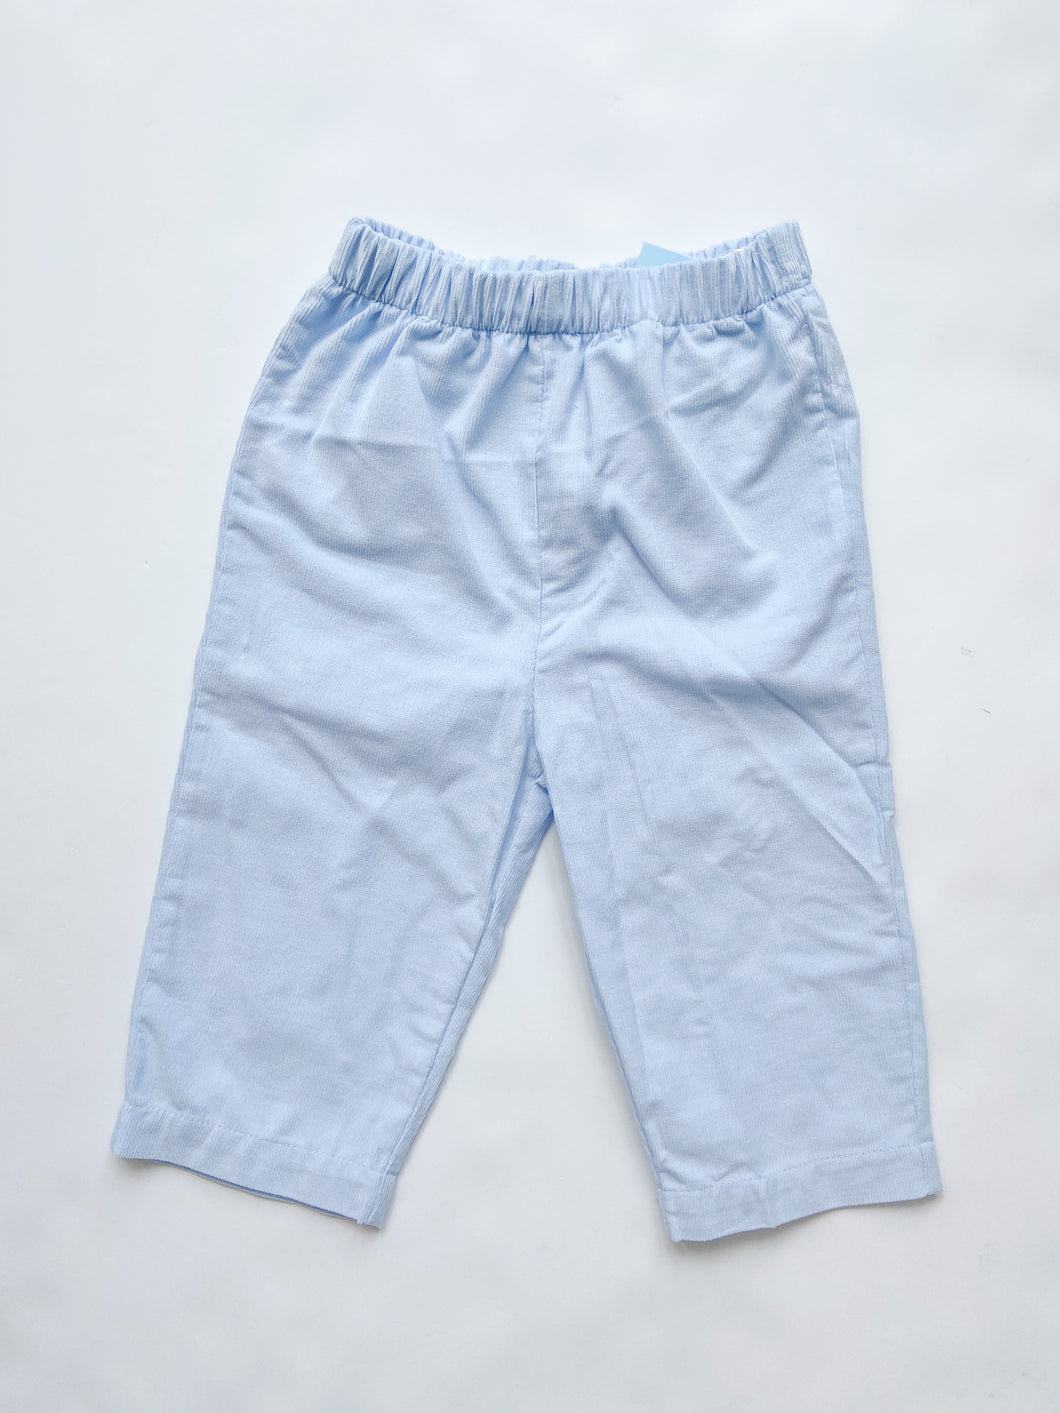 Boys Corduroy Pants 327PB - Infant